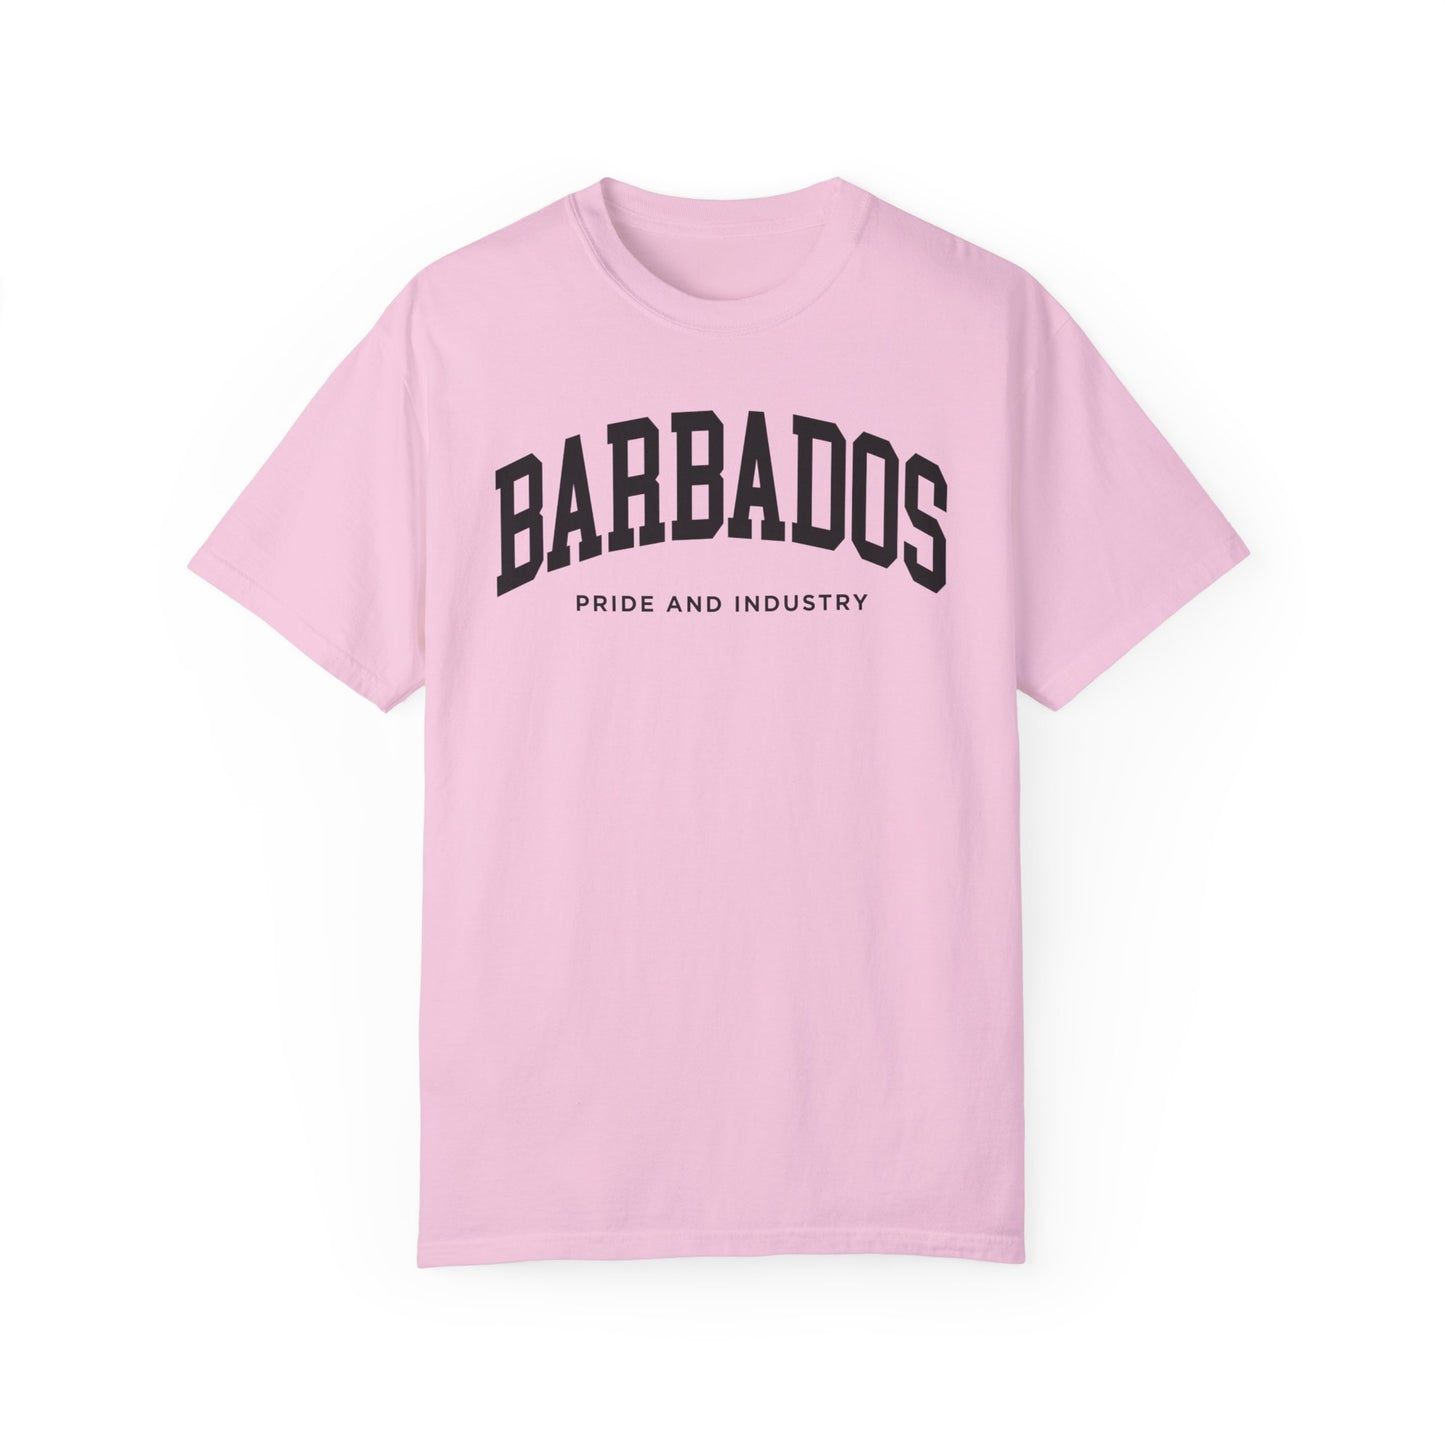 Barbados Comfort Colors® Tee